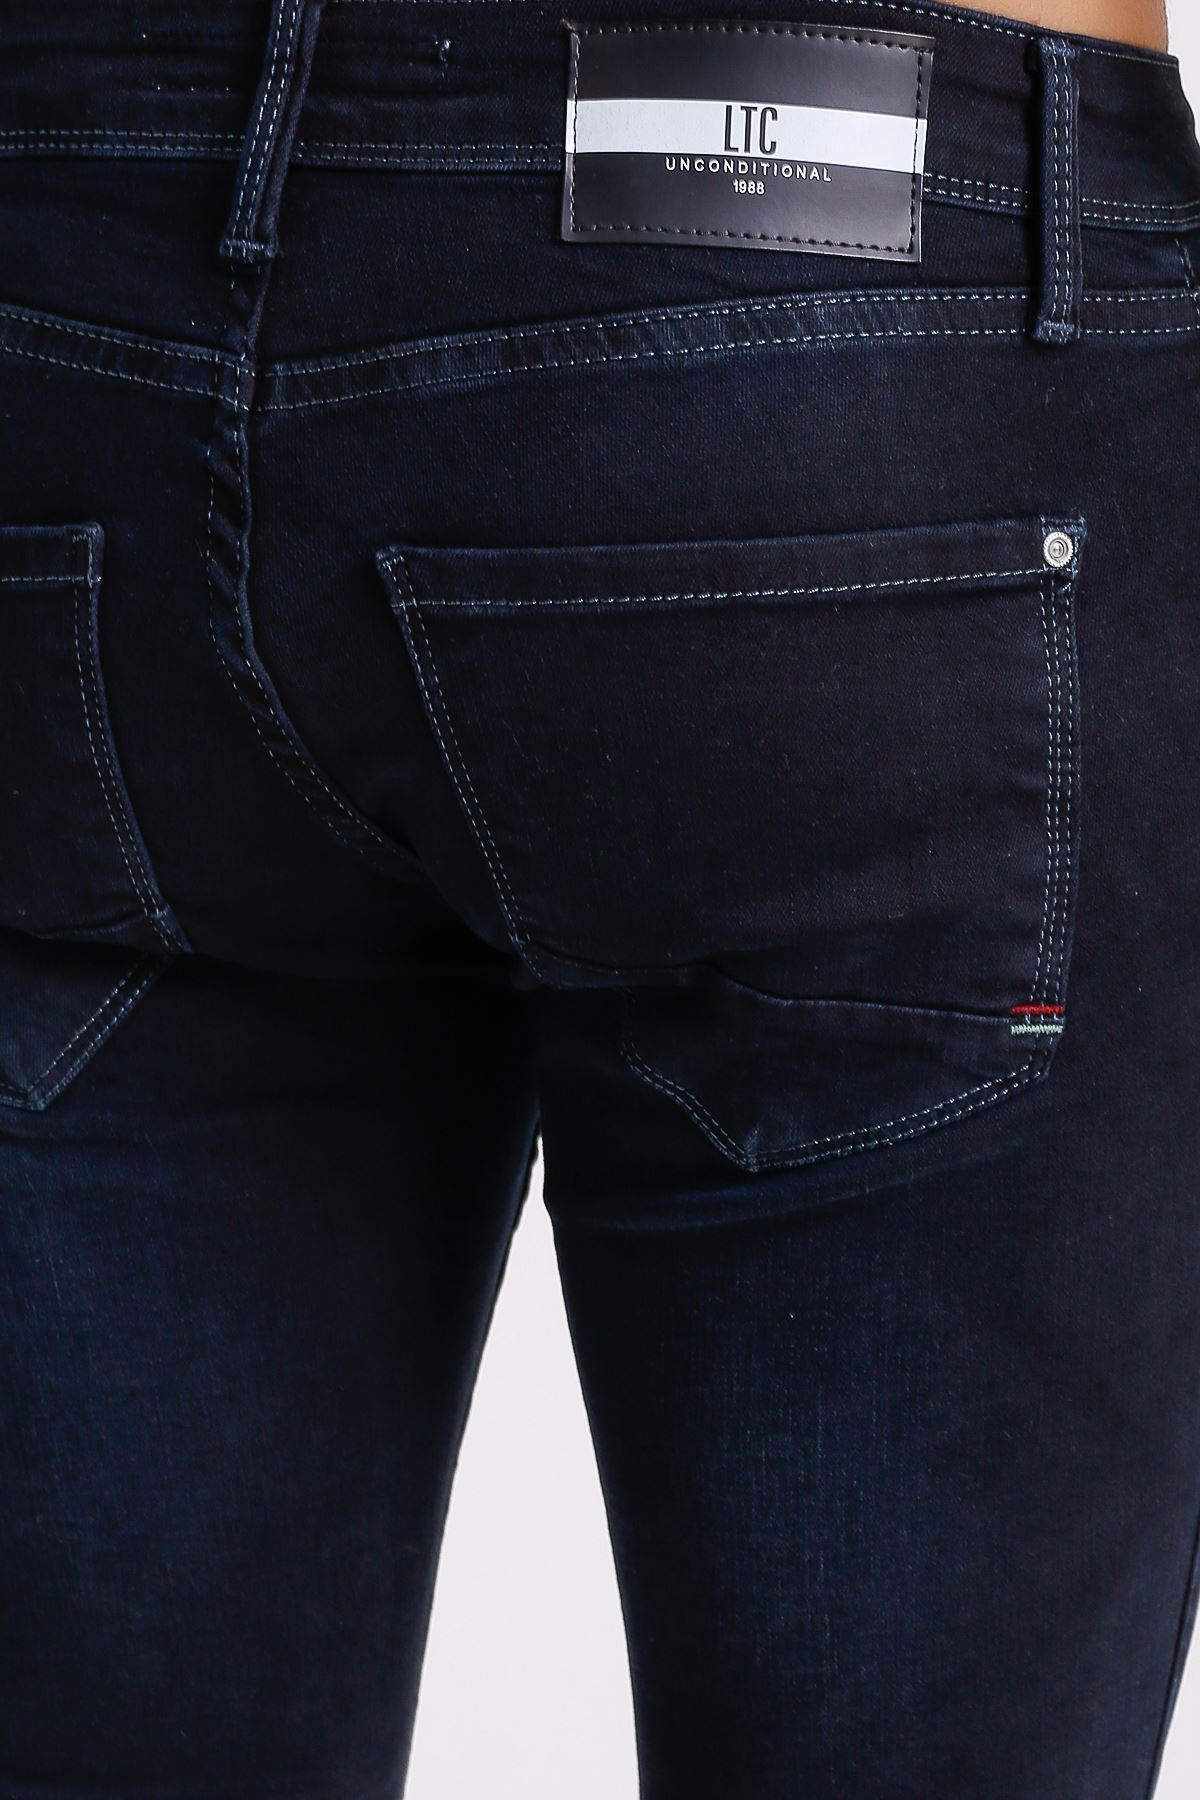 Lacivert Süperslim/sknny Fit Fermuarlı Erkek Jeans Pantolon